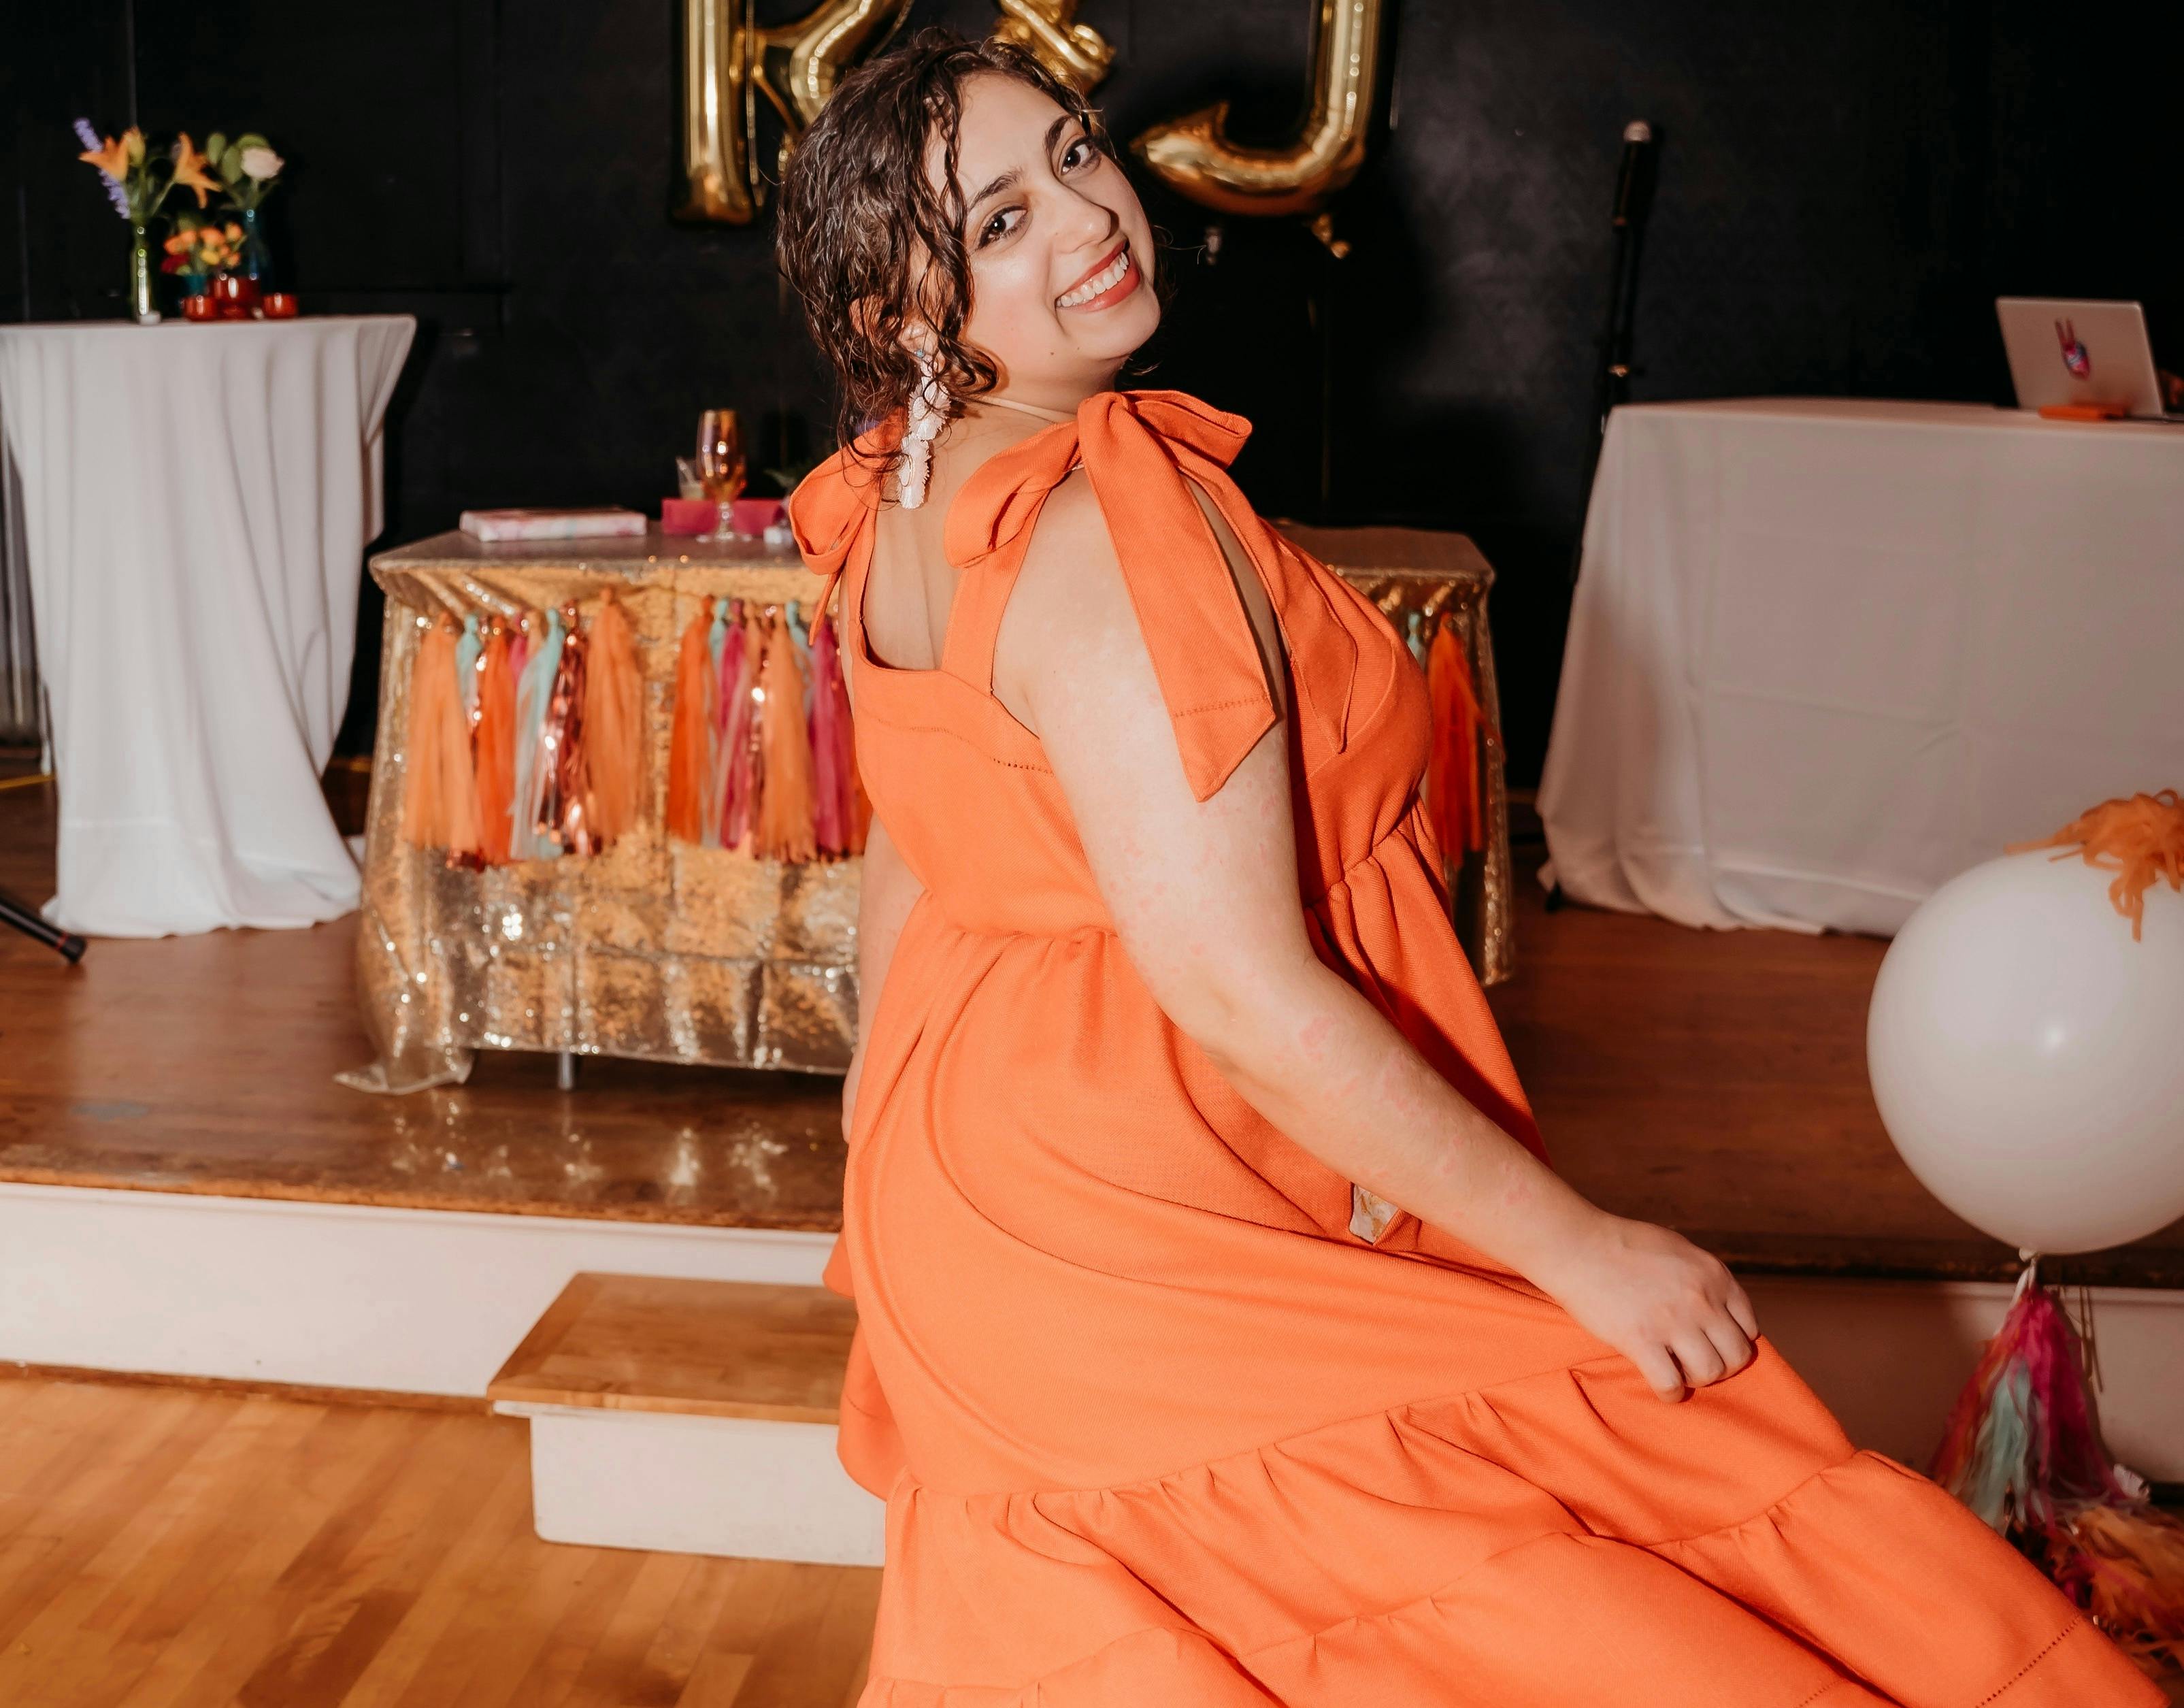 Dancing in an orange dress